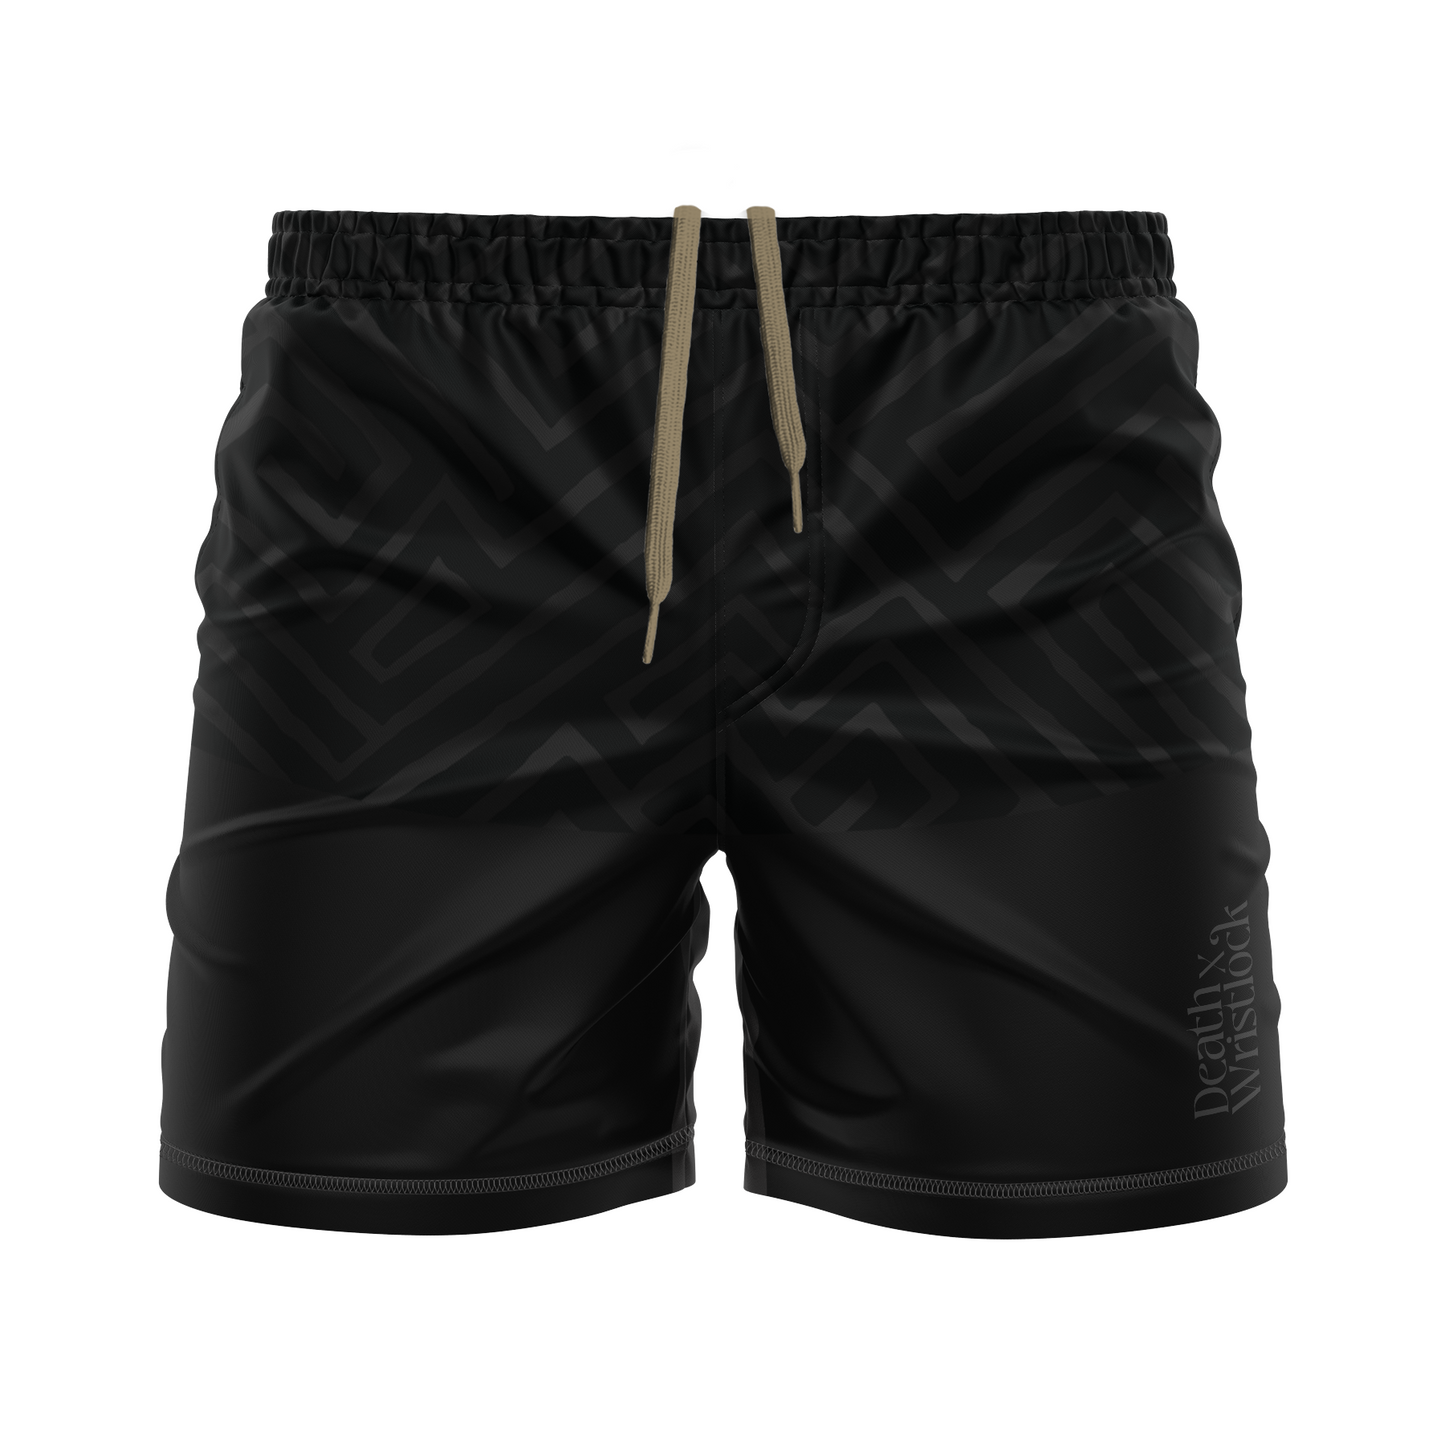 Death by Wristlock: Abyssus men's FC shorts, black